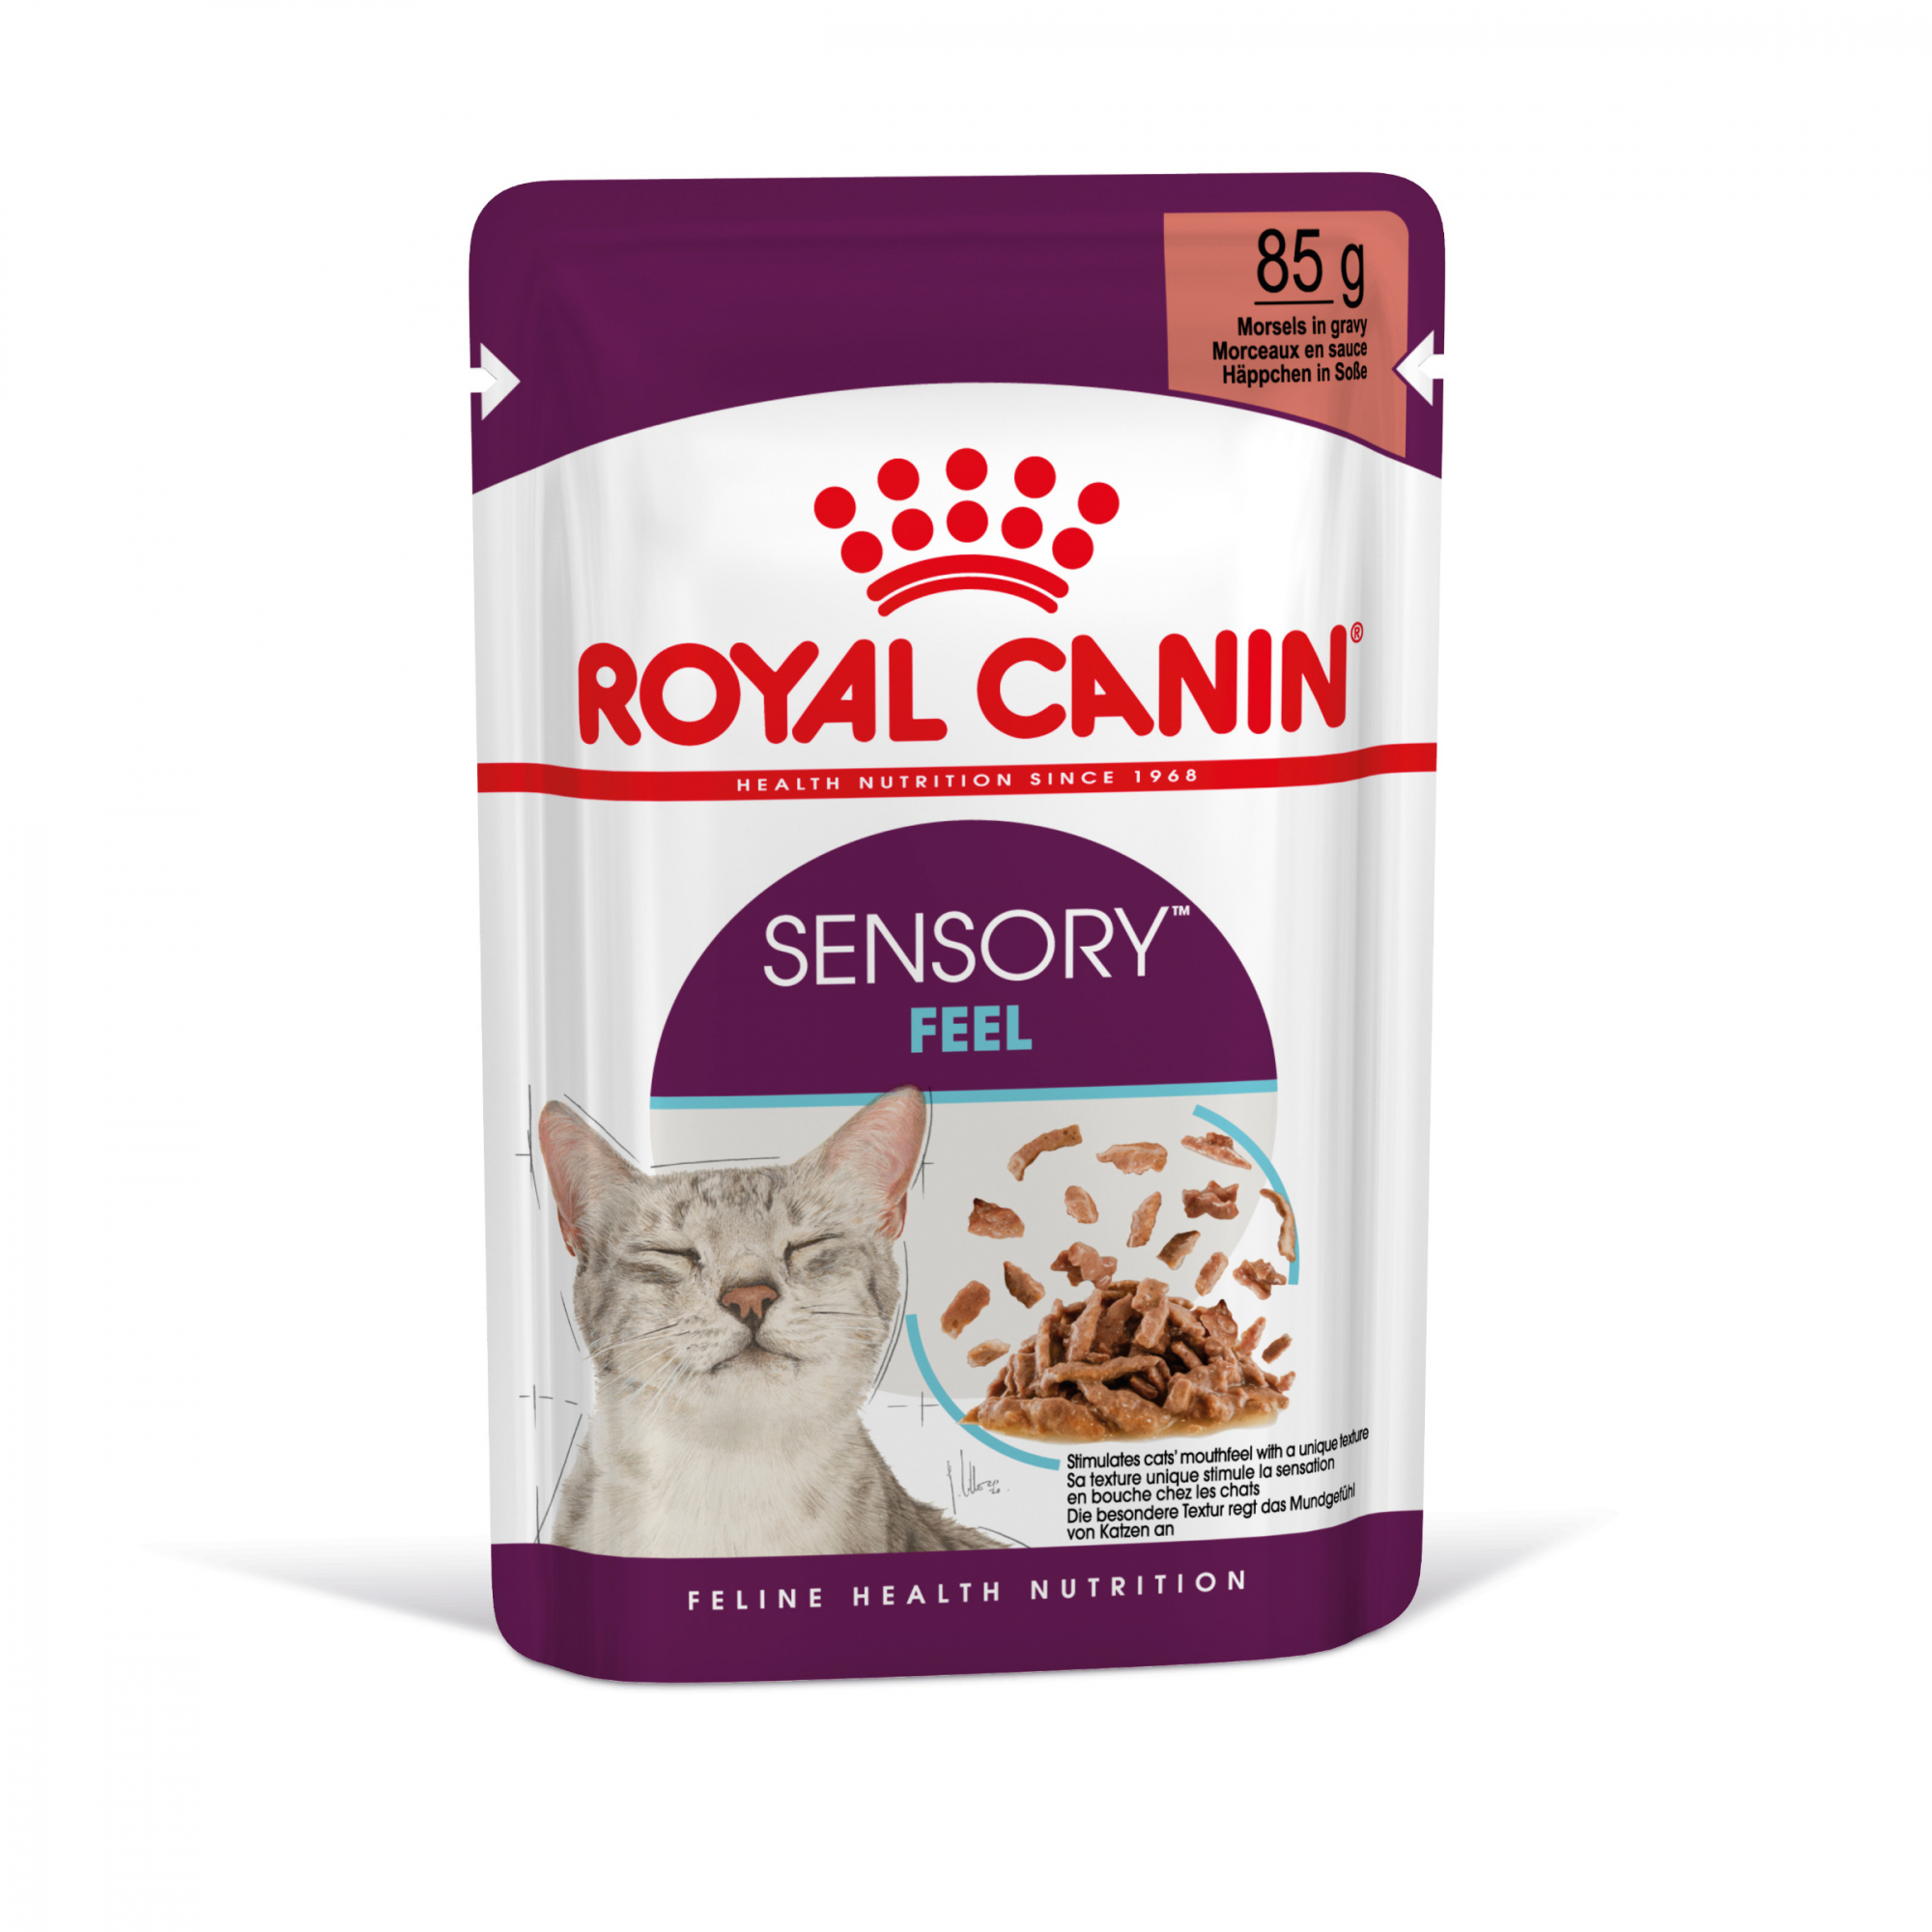 Royal Canin Sensory Feel pâtée en sauce pour chat